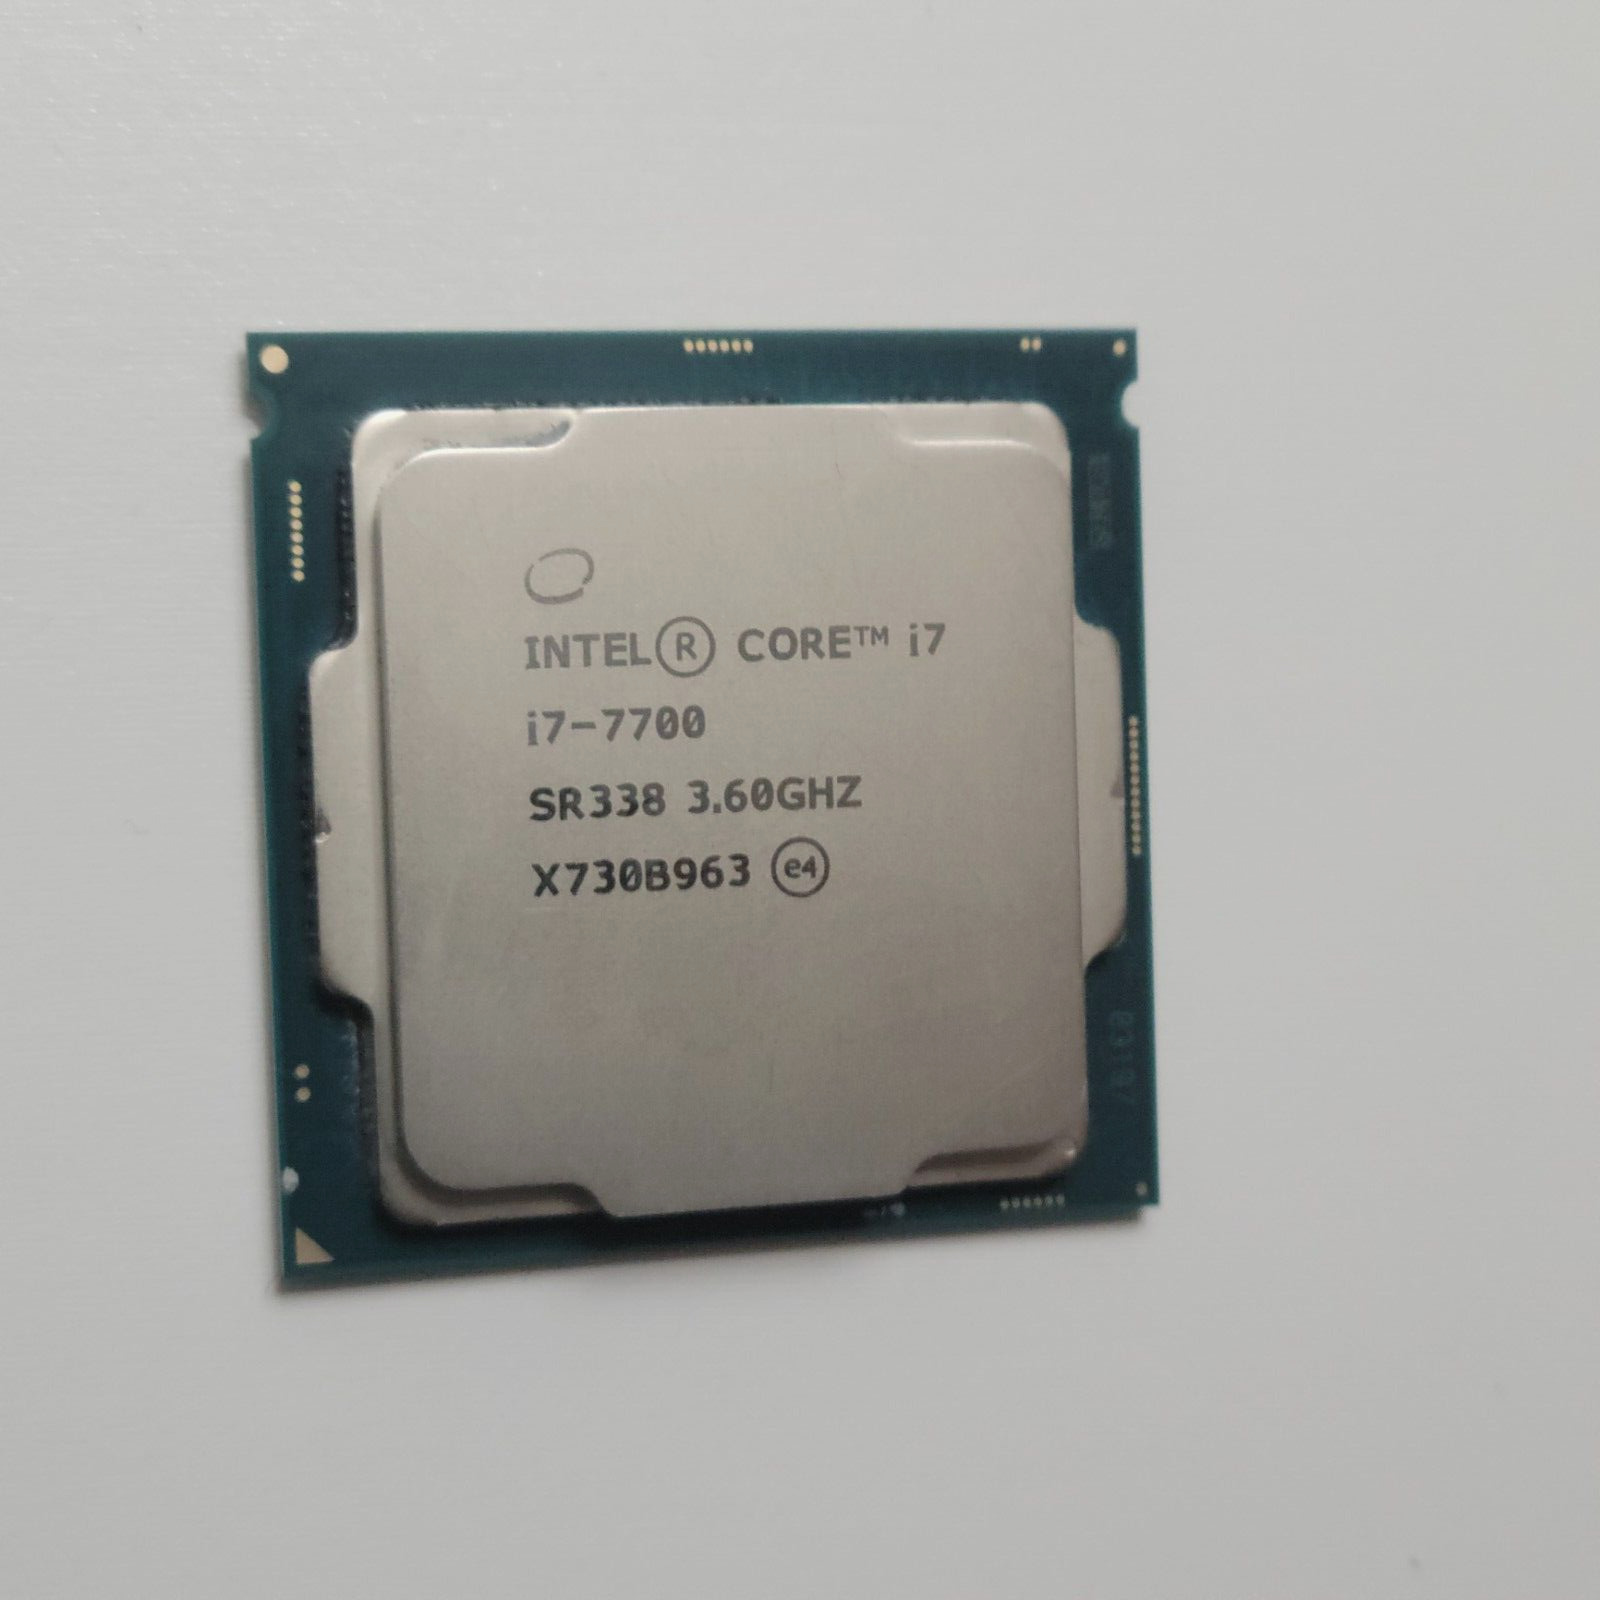 Intel Core i7-7700 @ 3.60GHz - Kaby Lake - LGA 1151 Quad-Core Desktop Processor